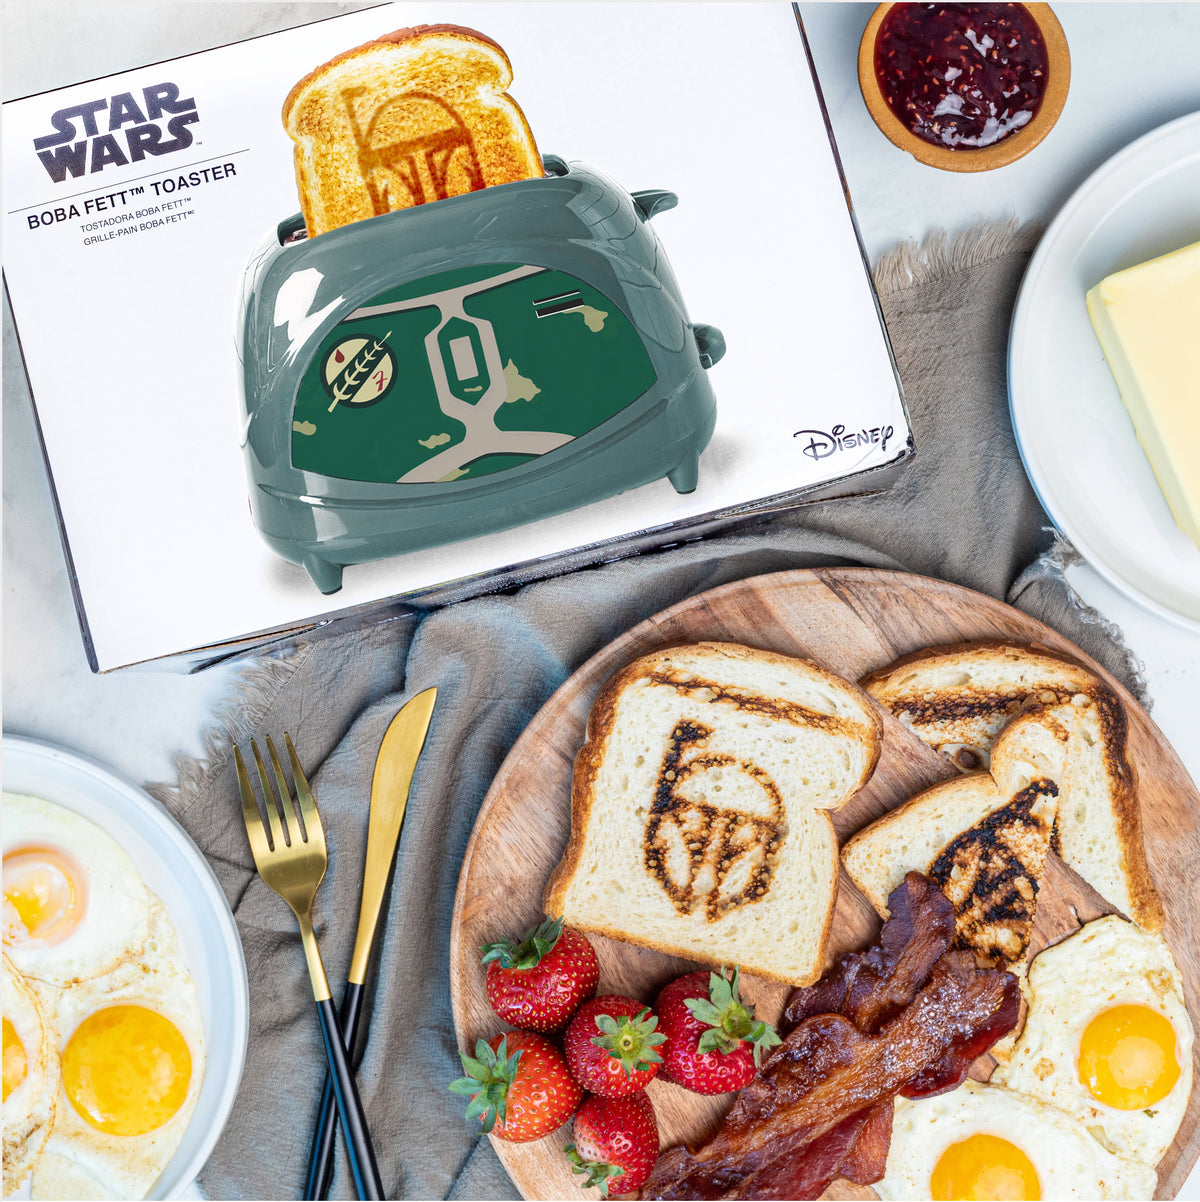 Star Wars Boba Fett Toaster - Uncanny Brands